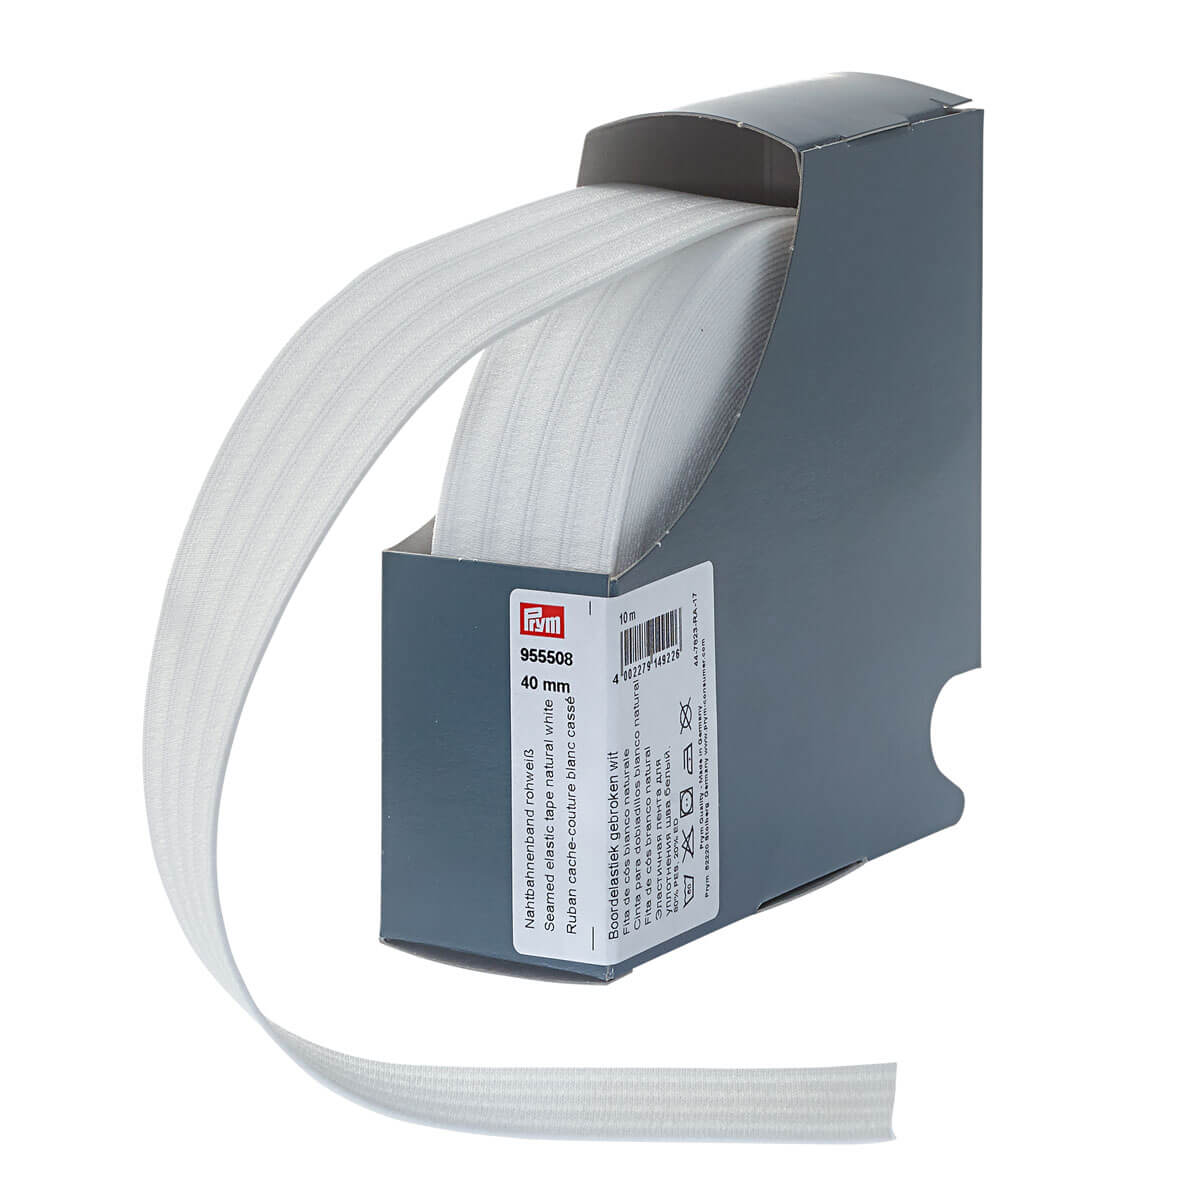 PRYM 955508 Эластичная лента для уплотнения шва, 40 мм х 10м, белый натуральный